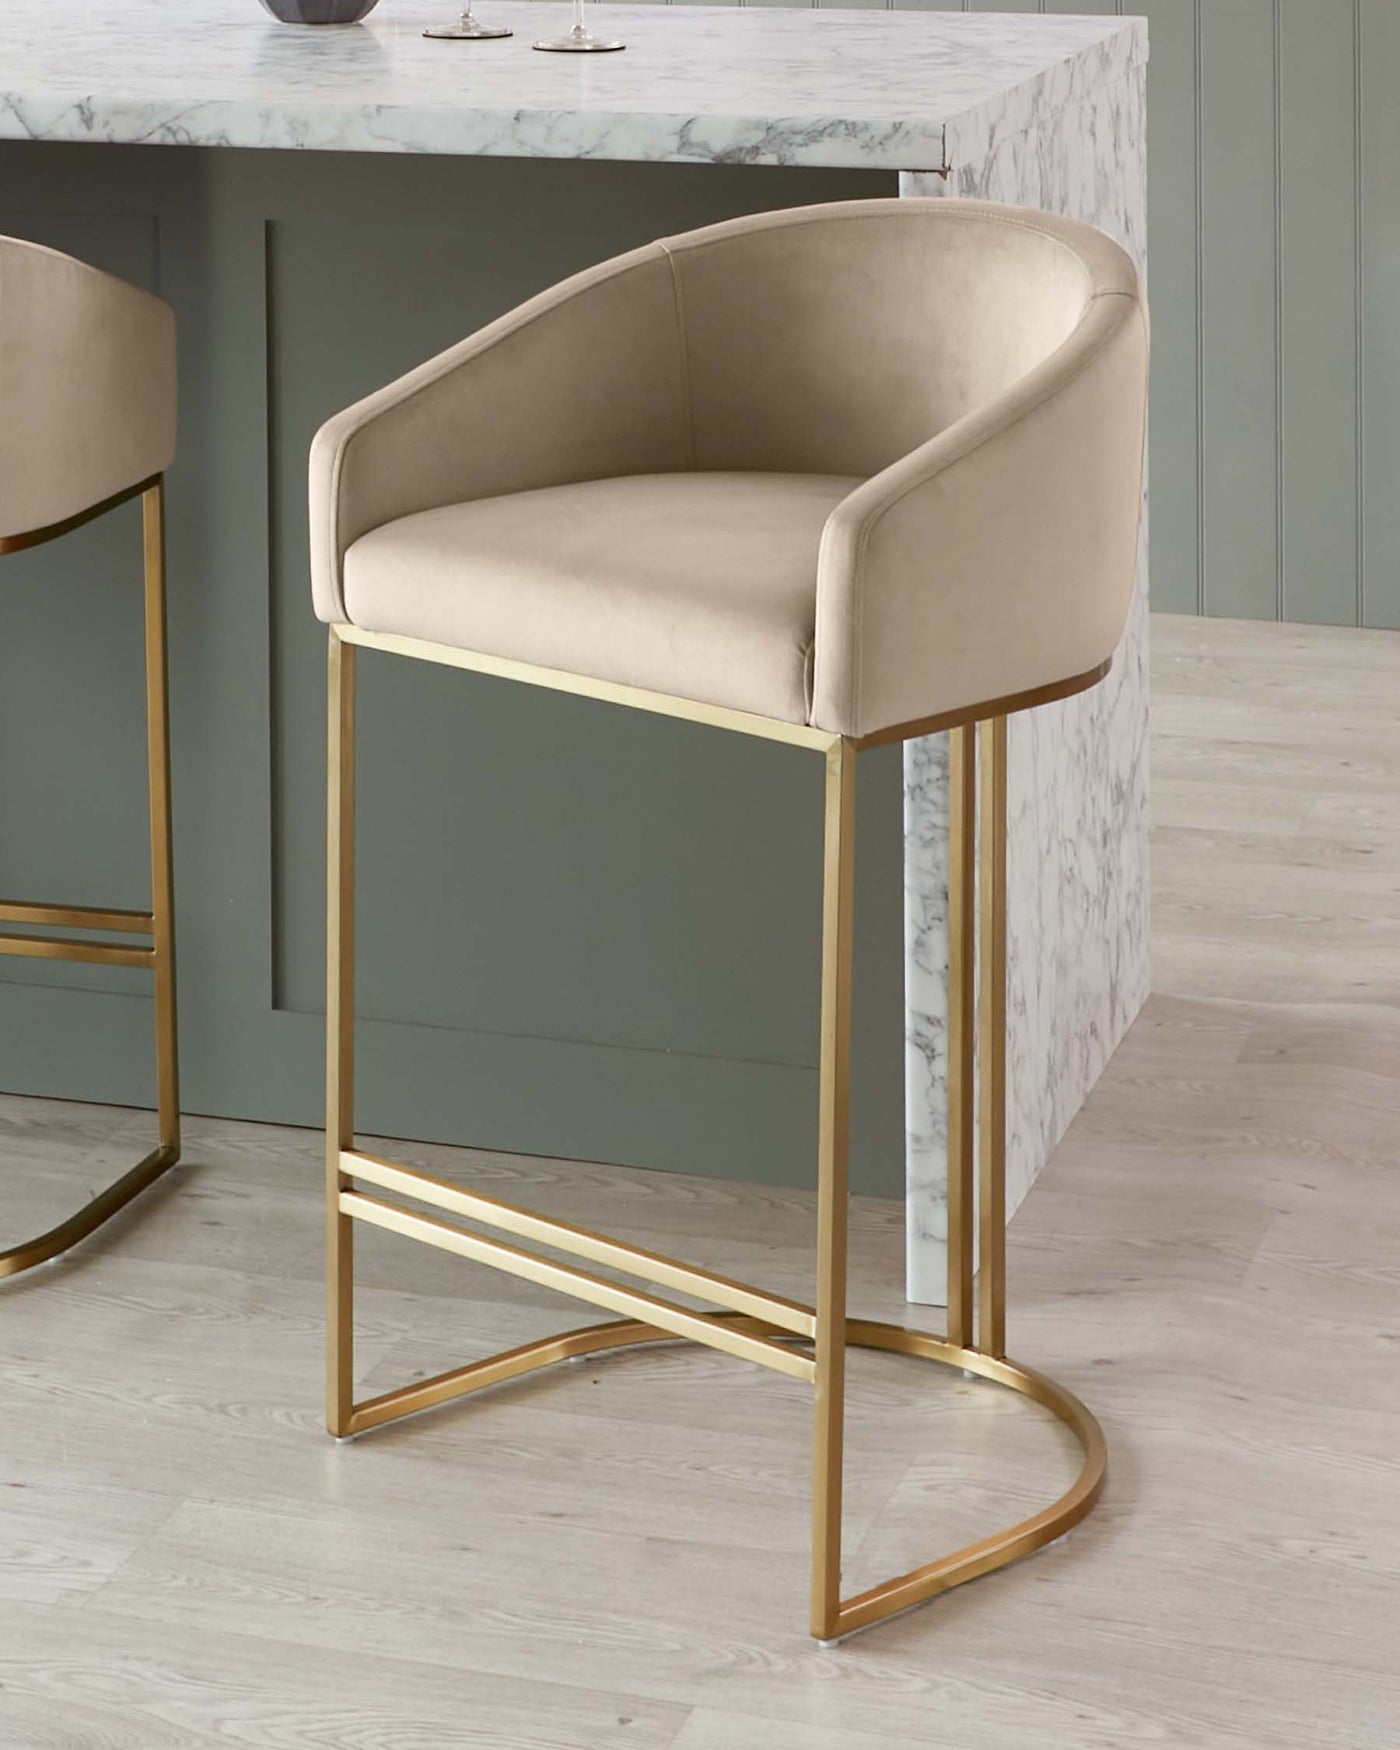 Elegant modern bar stool with a beige upholstered seat and curved backrest, set on sleek gold-finished metal legs.